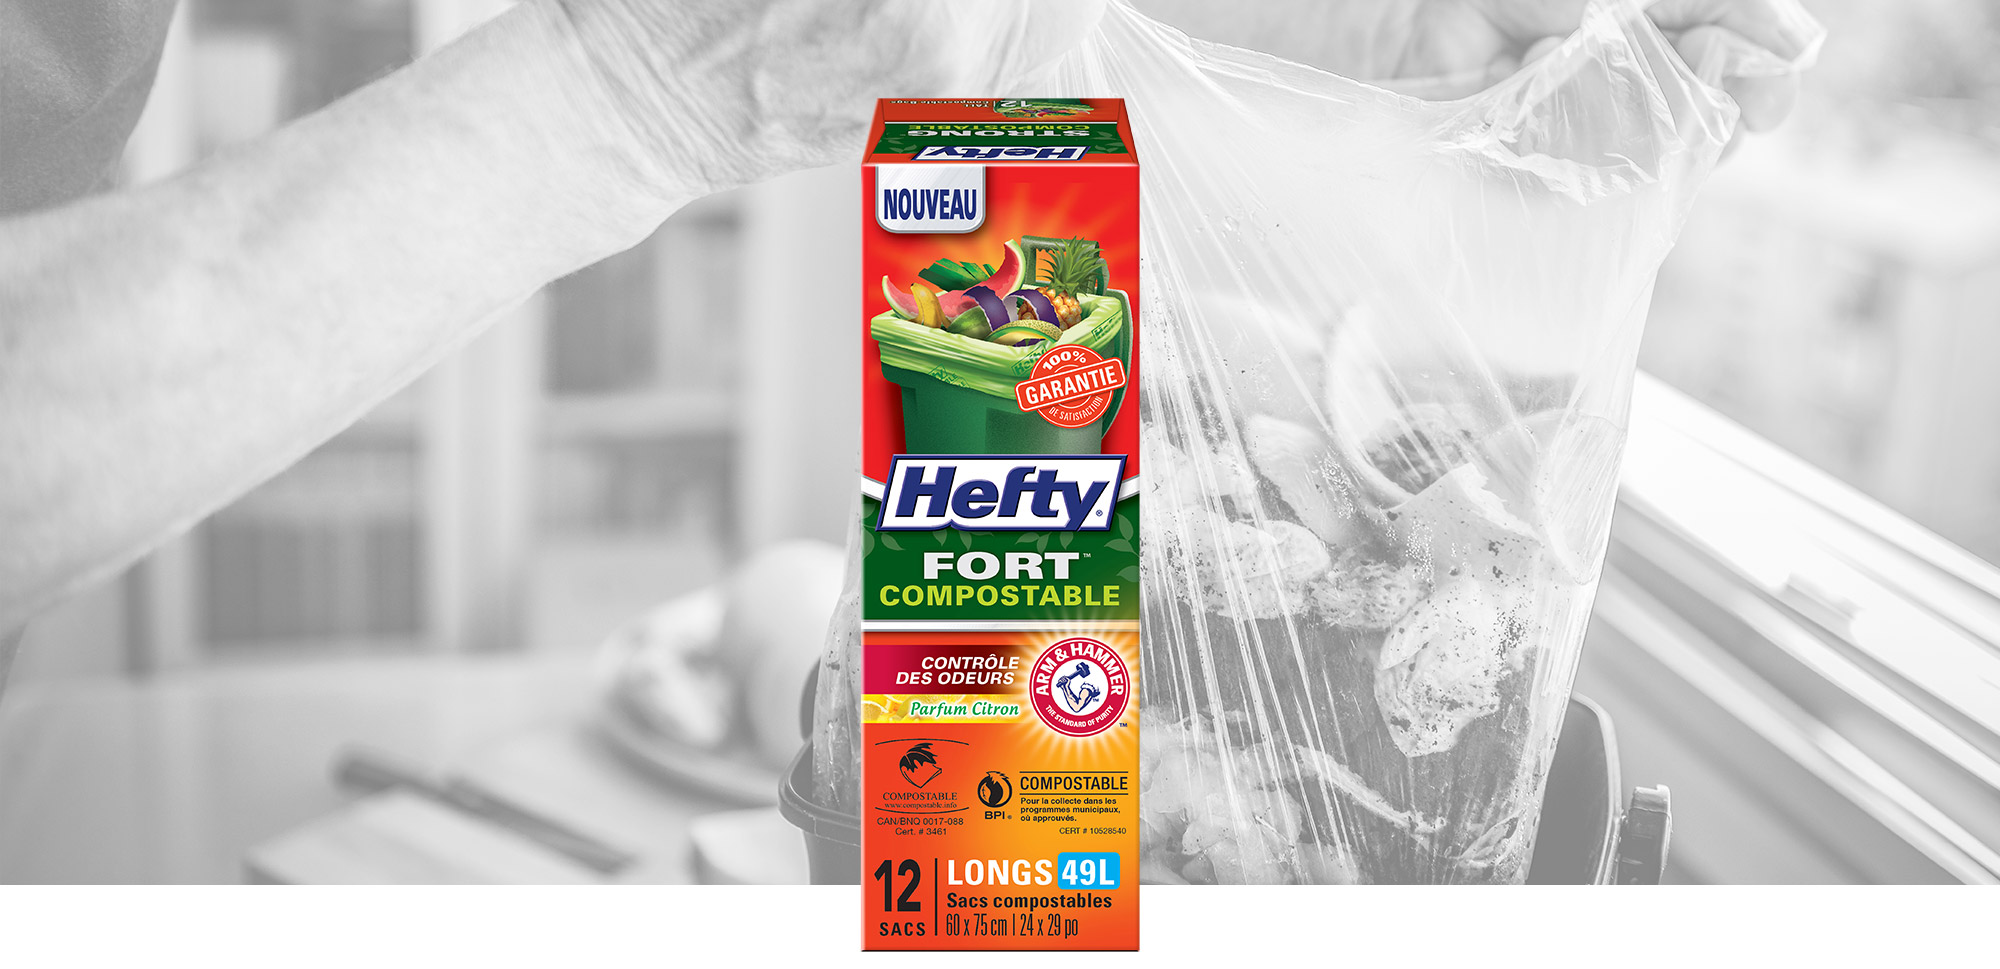 Longs sacs compostables Hefty® FORT